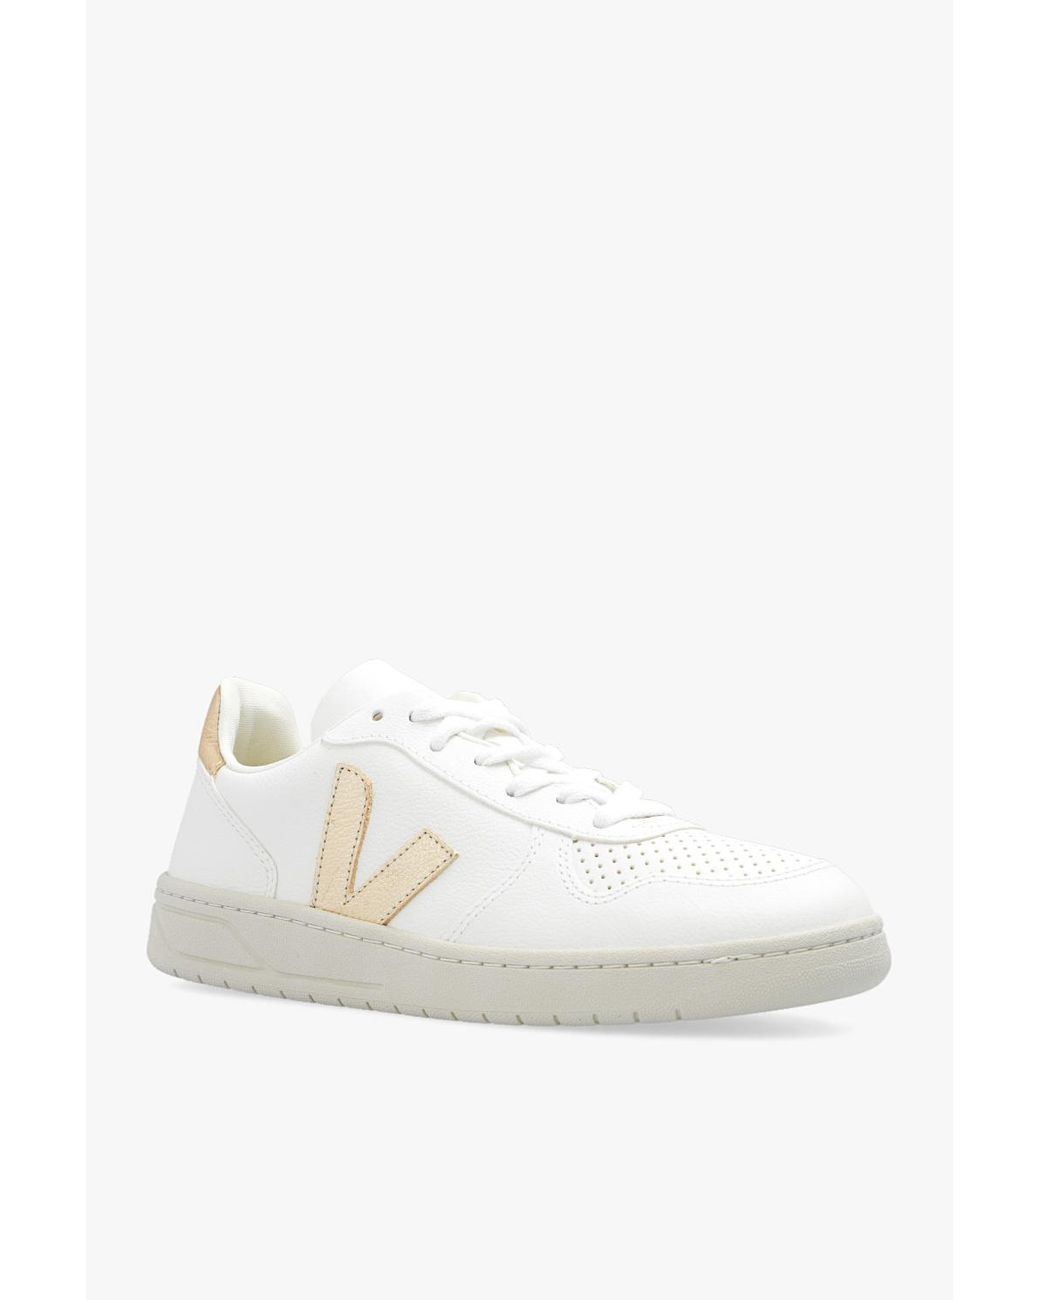 Veja Leather 'v-10' Sneakers in White | Lyst